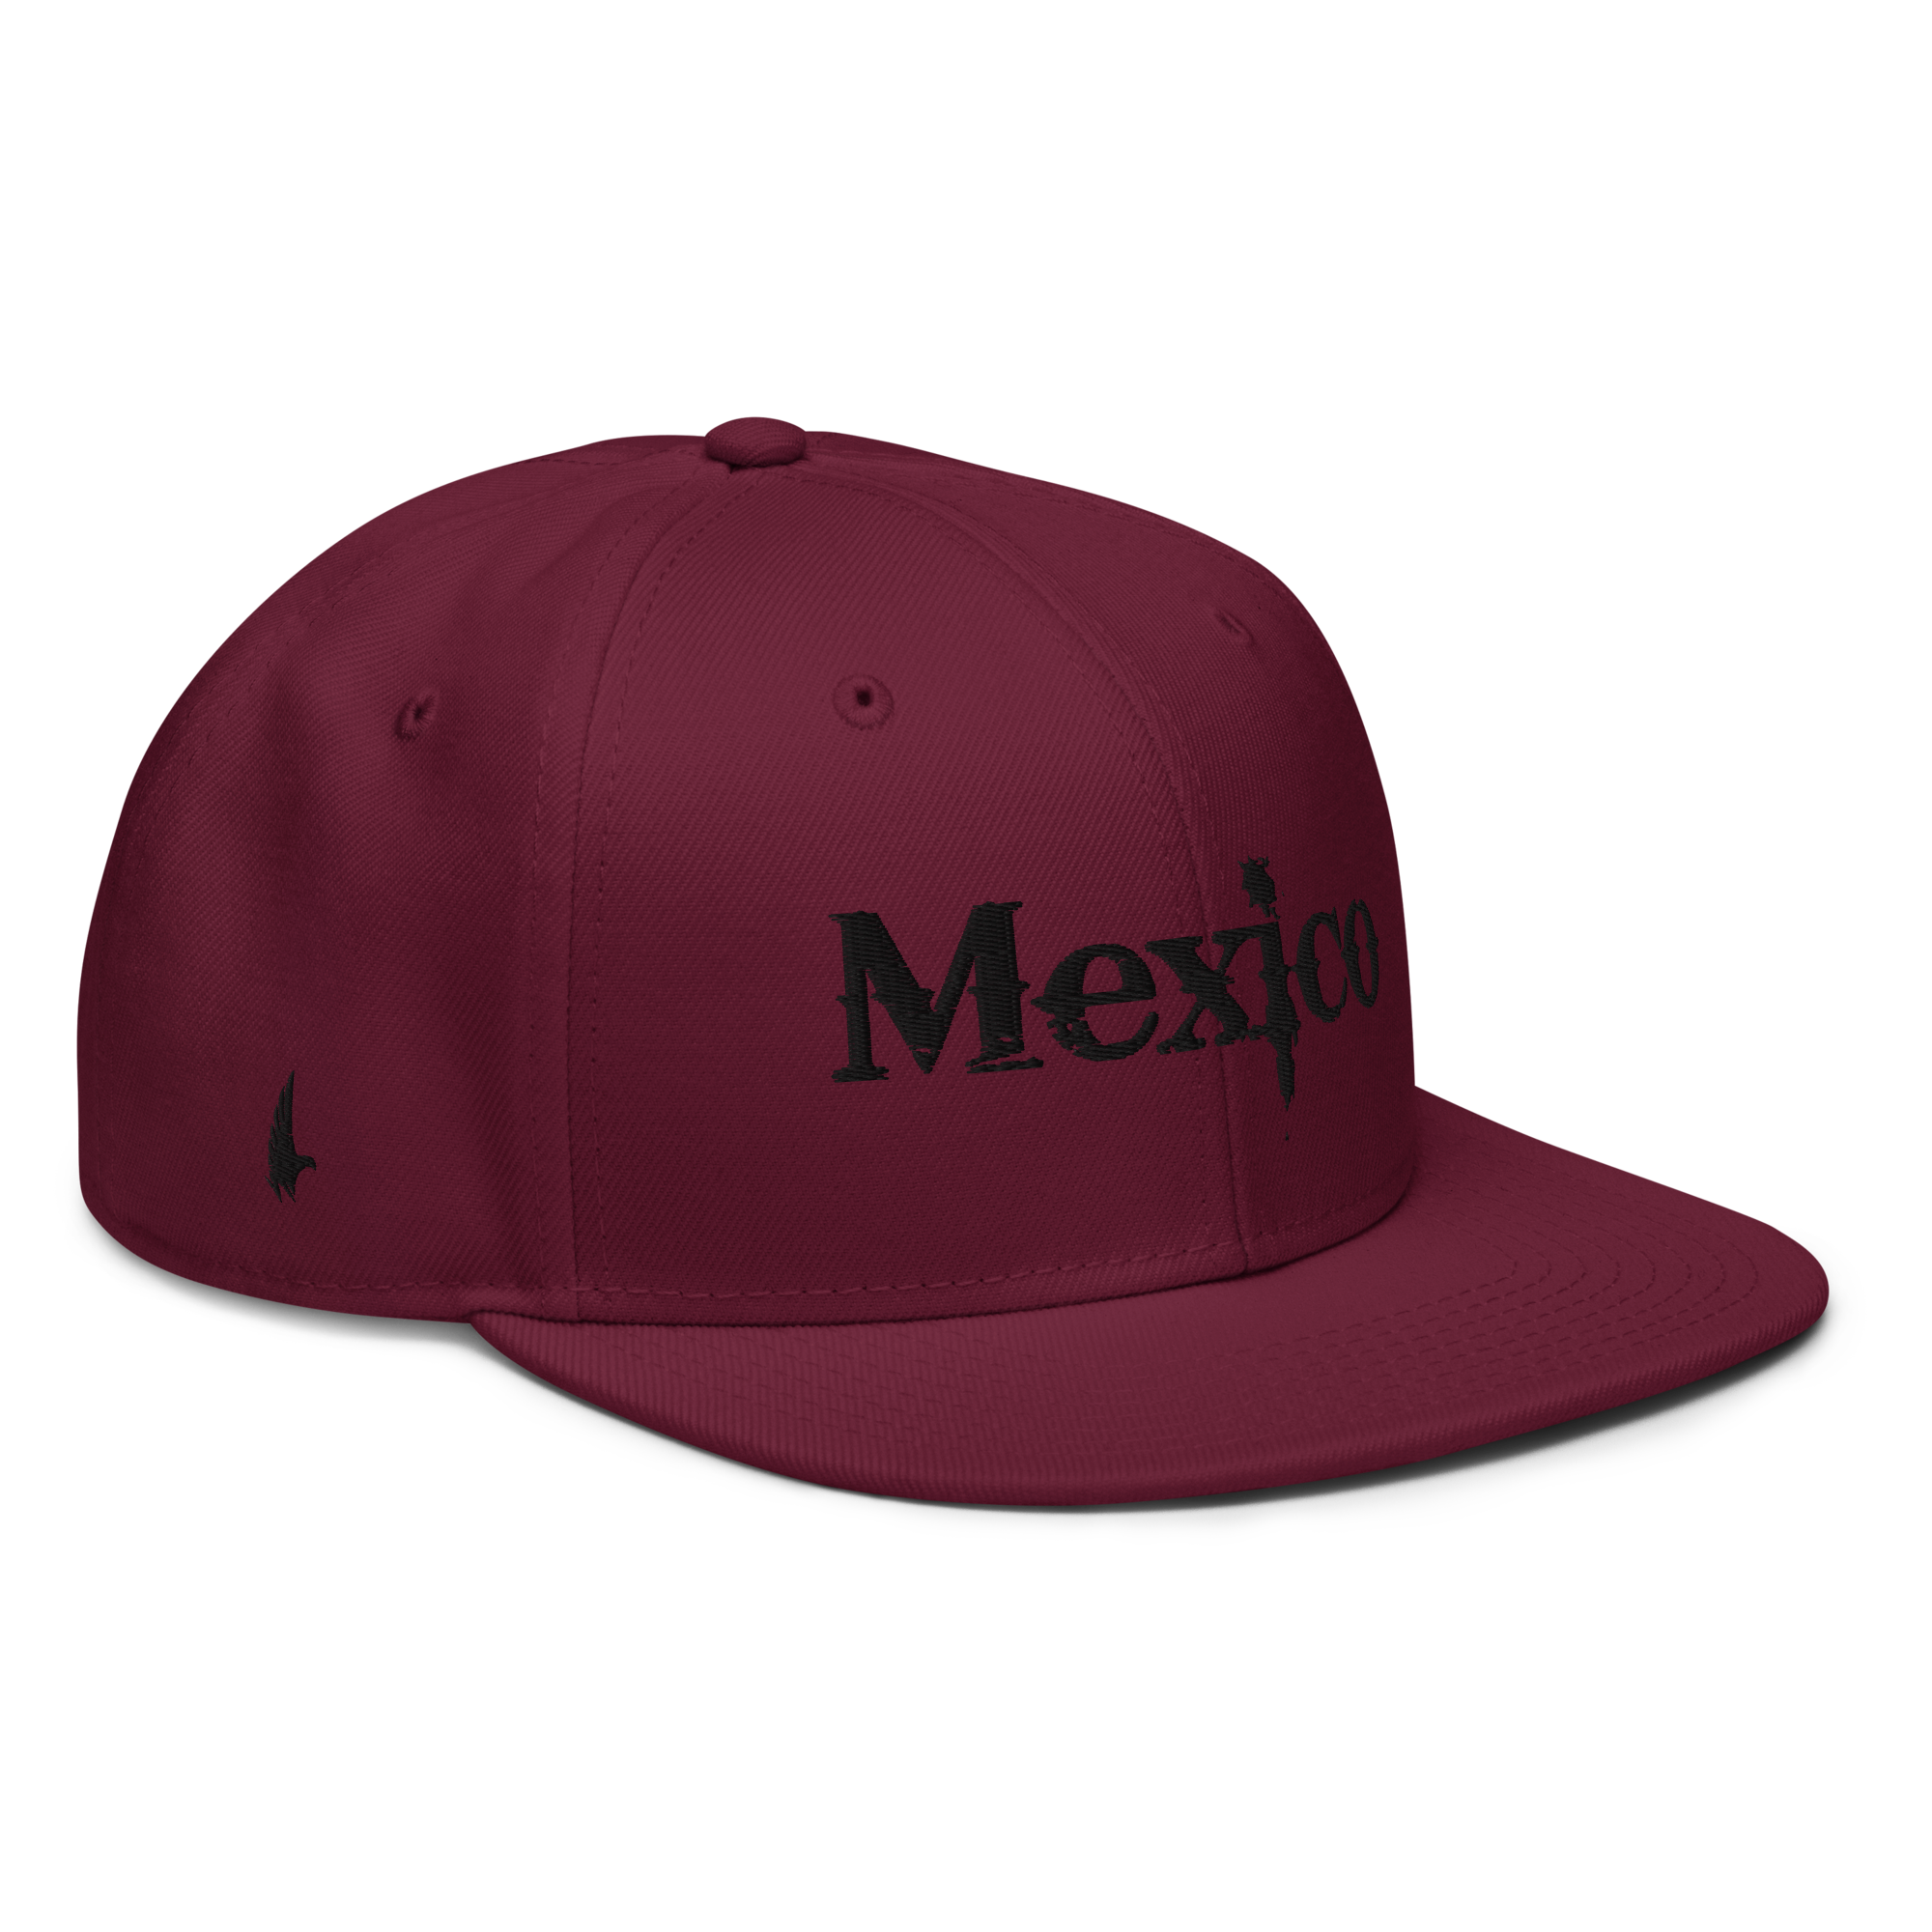 Mexico Snapback Hat - Maroon/Black OS - Loyalty Vibes